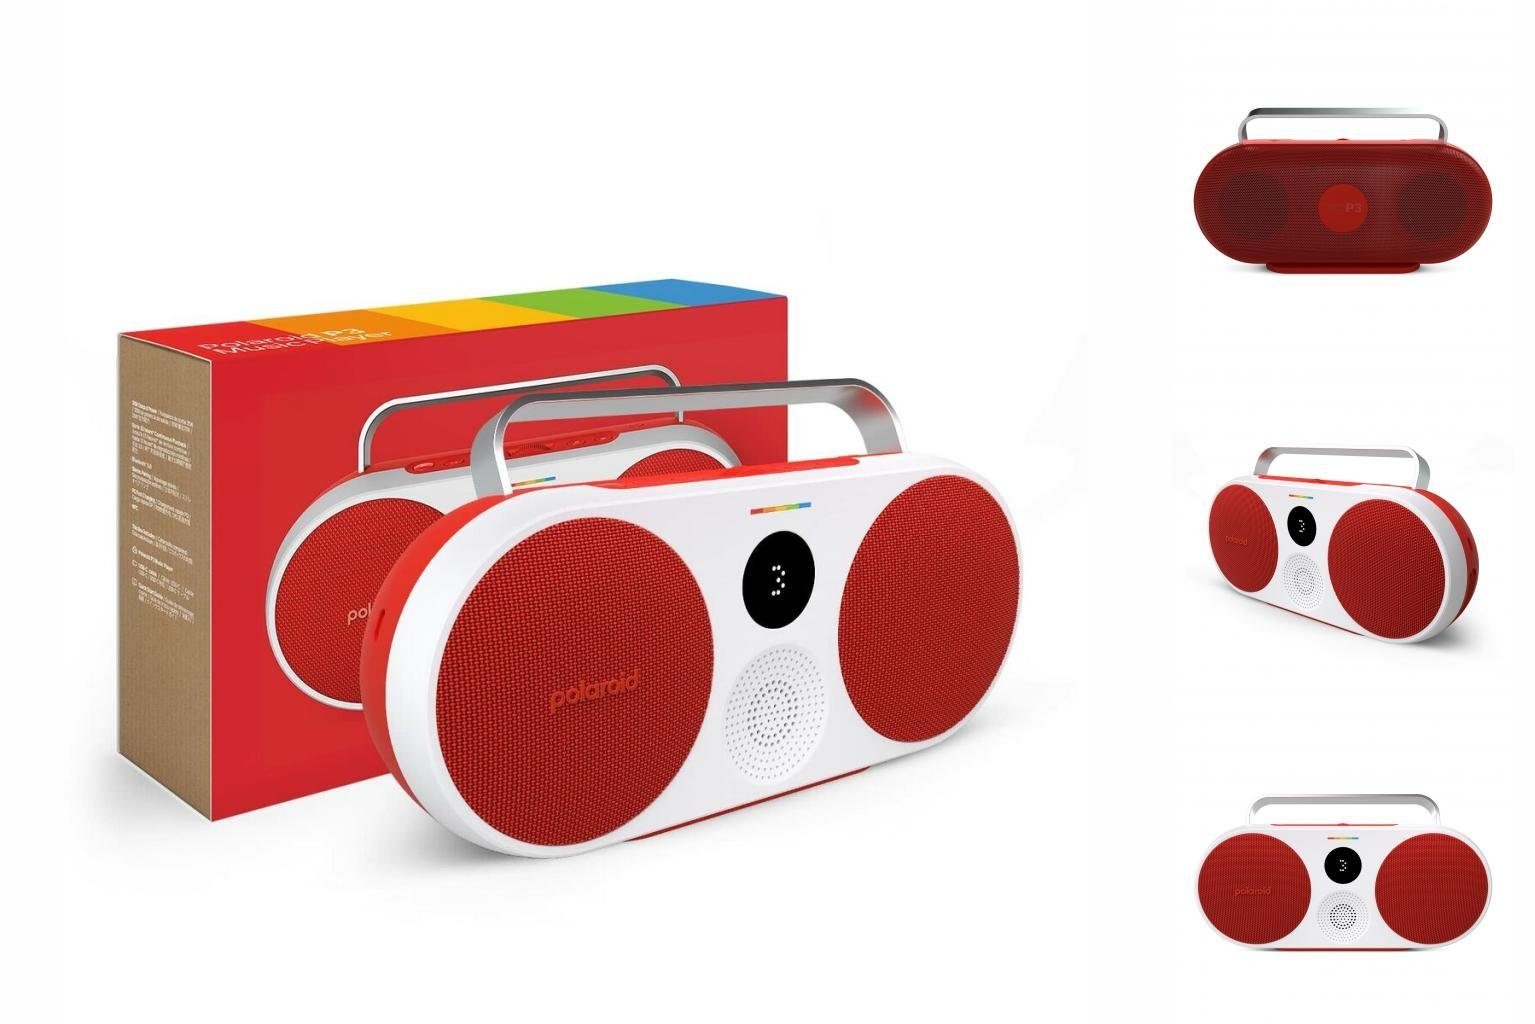 Polaroid Tragbare Bluetooth-Lautsprecher Polaroid P3 Lautsprecher Rot